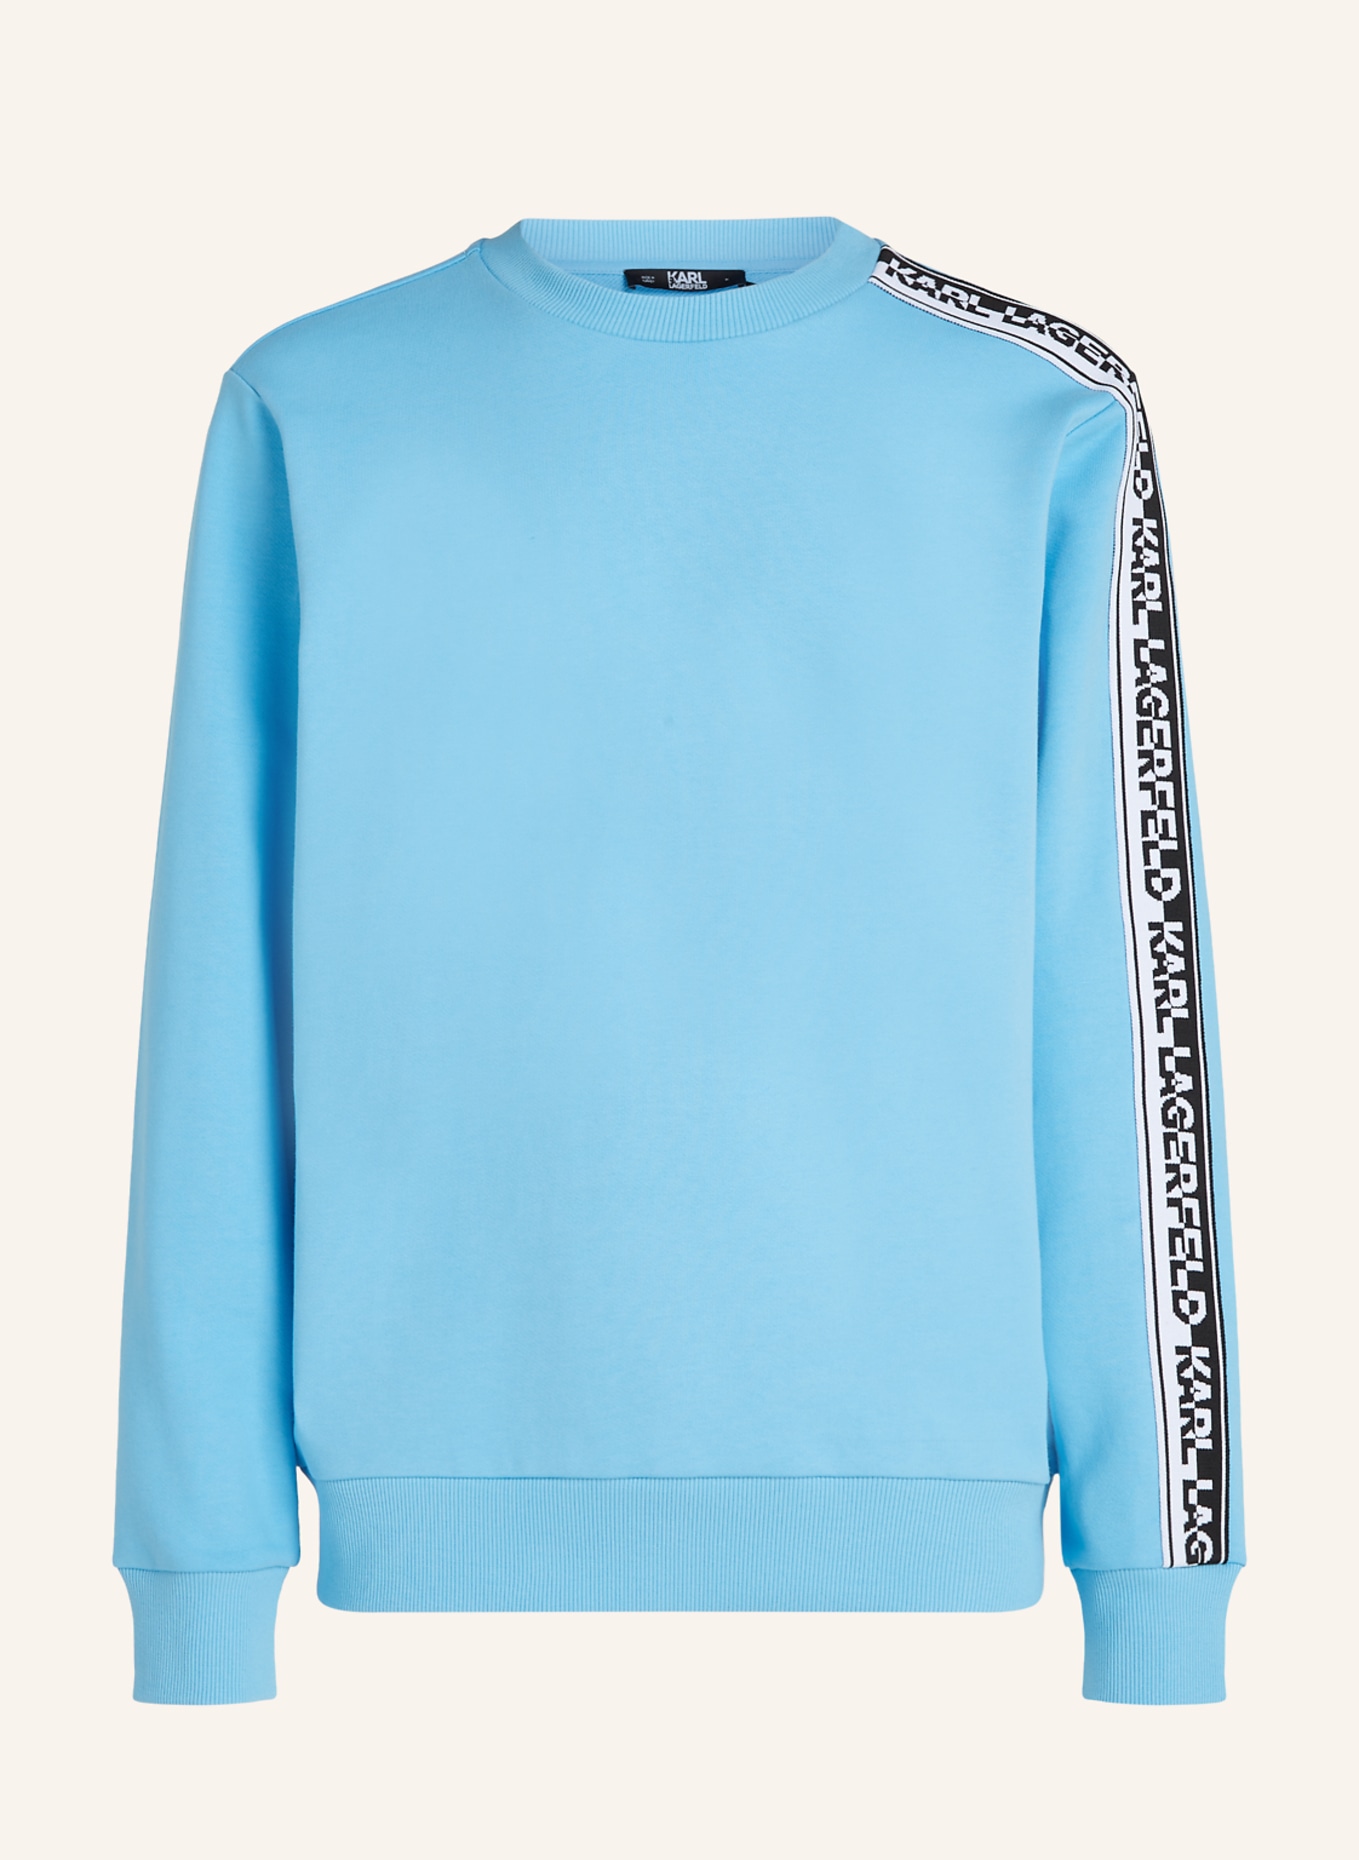 KARL LAGERFELD Sweatshirt, Farbe: BLAU (Bild 1)